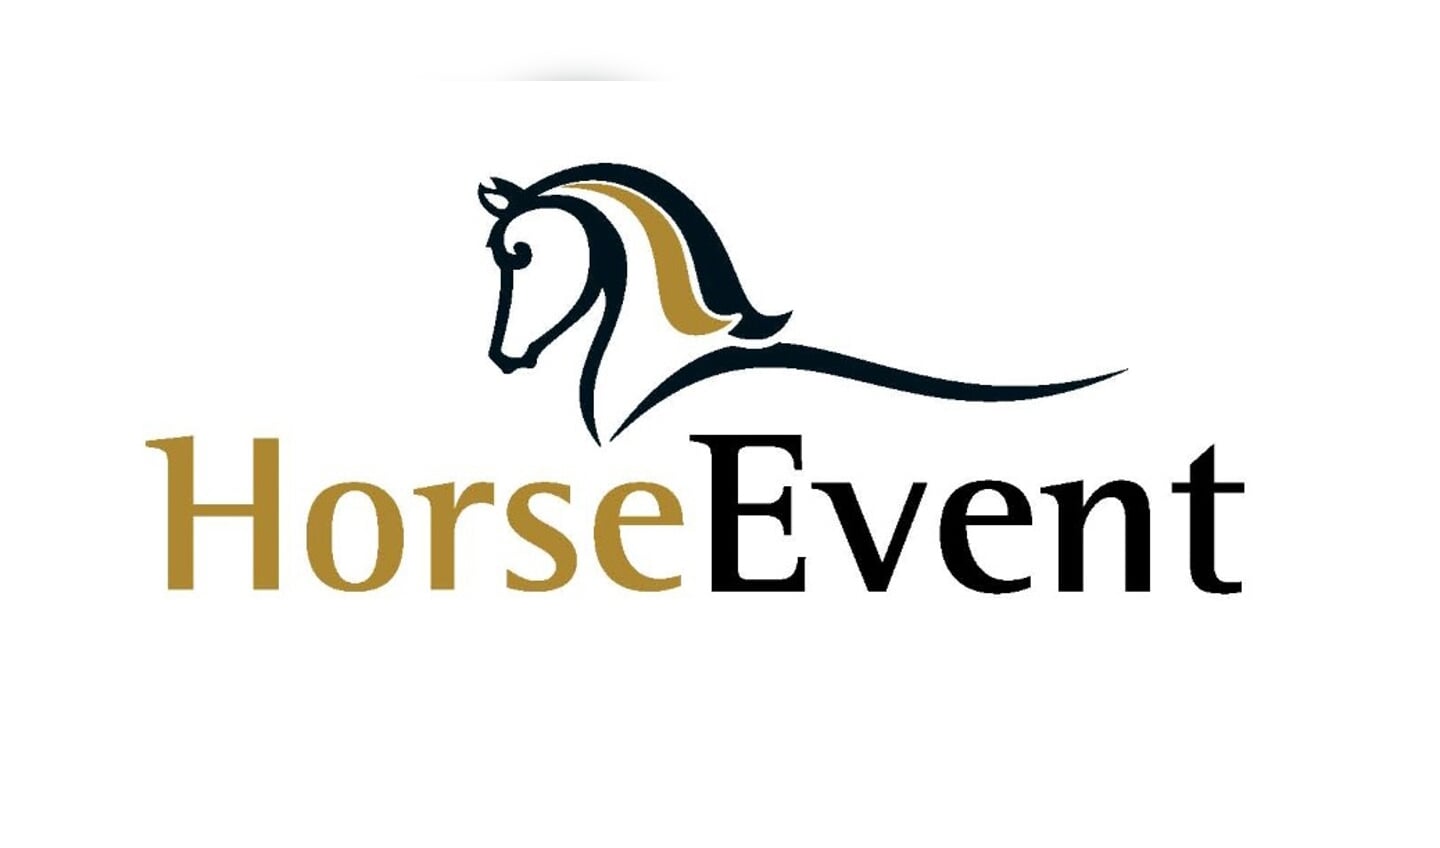 Horse Event logo